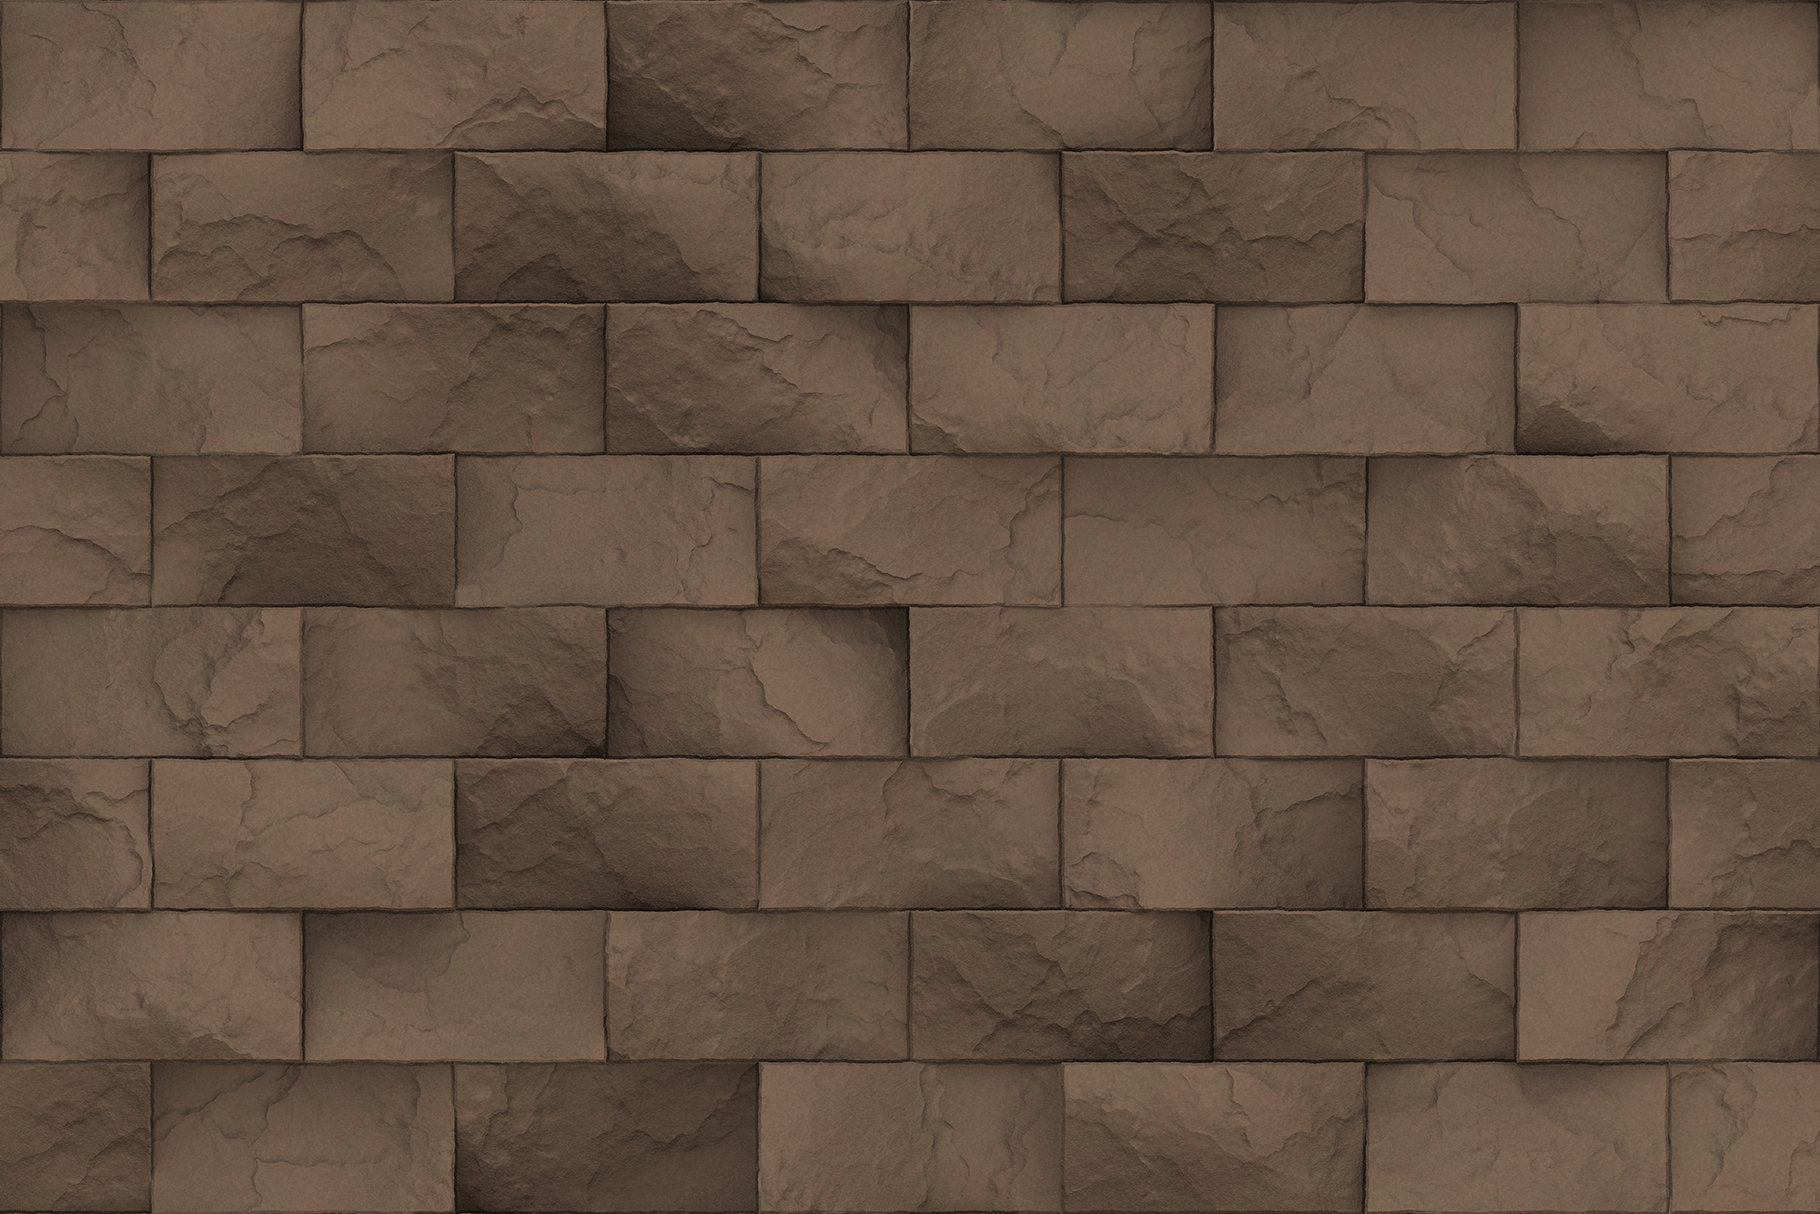 Stone Block Wall Texture